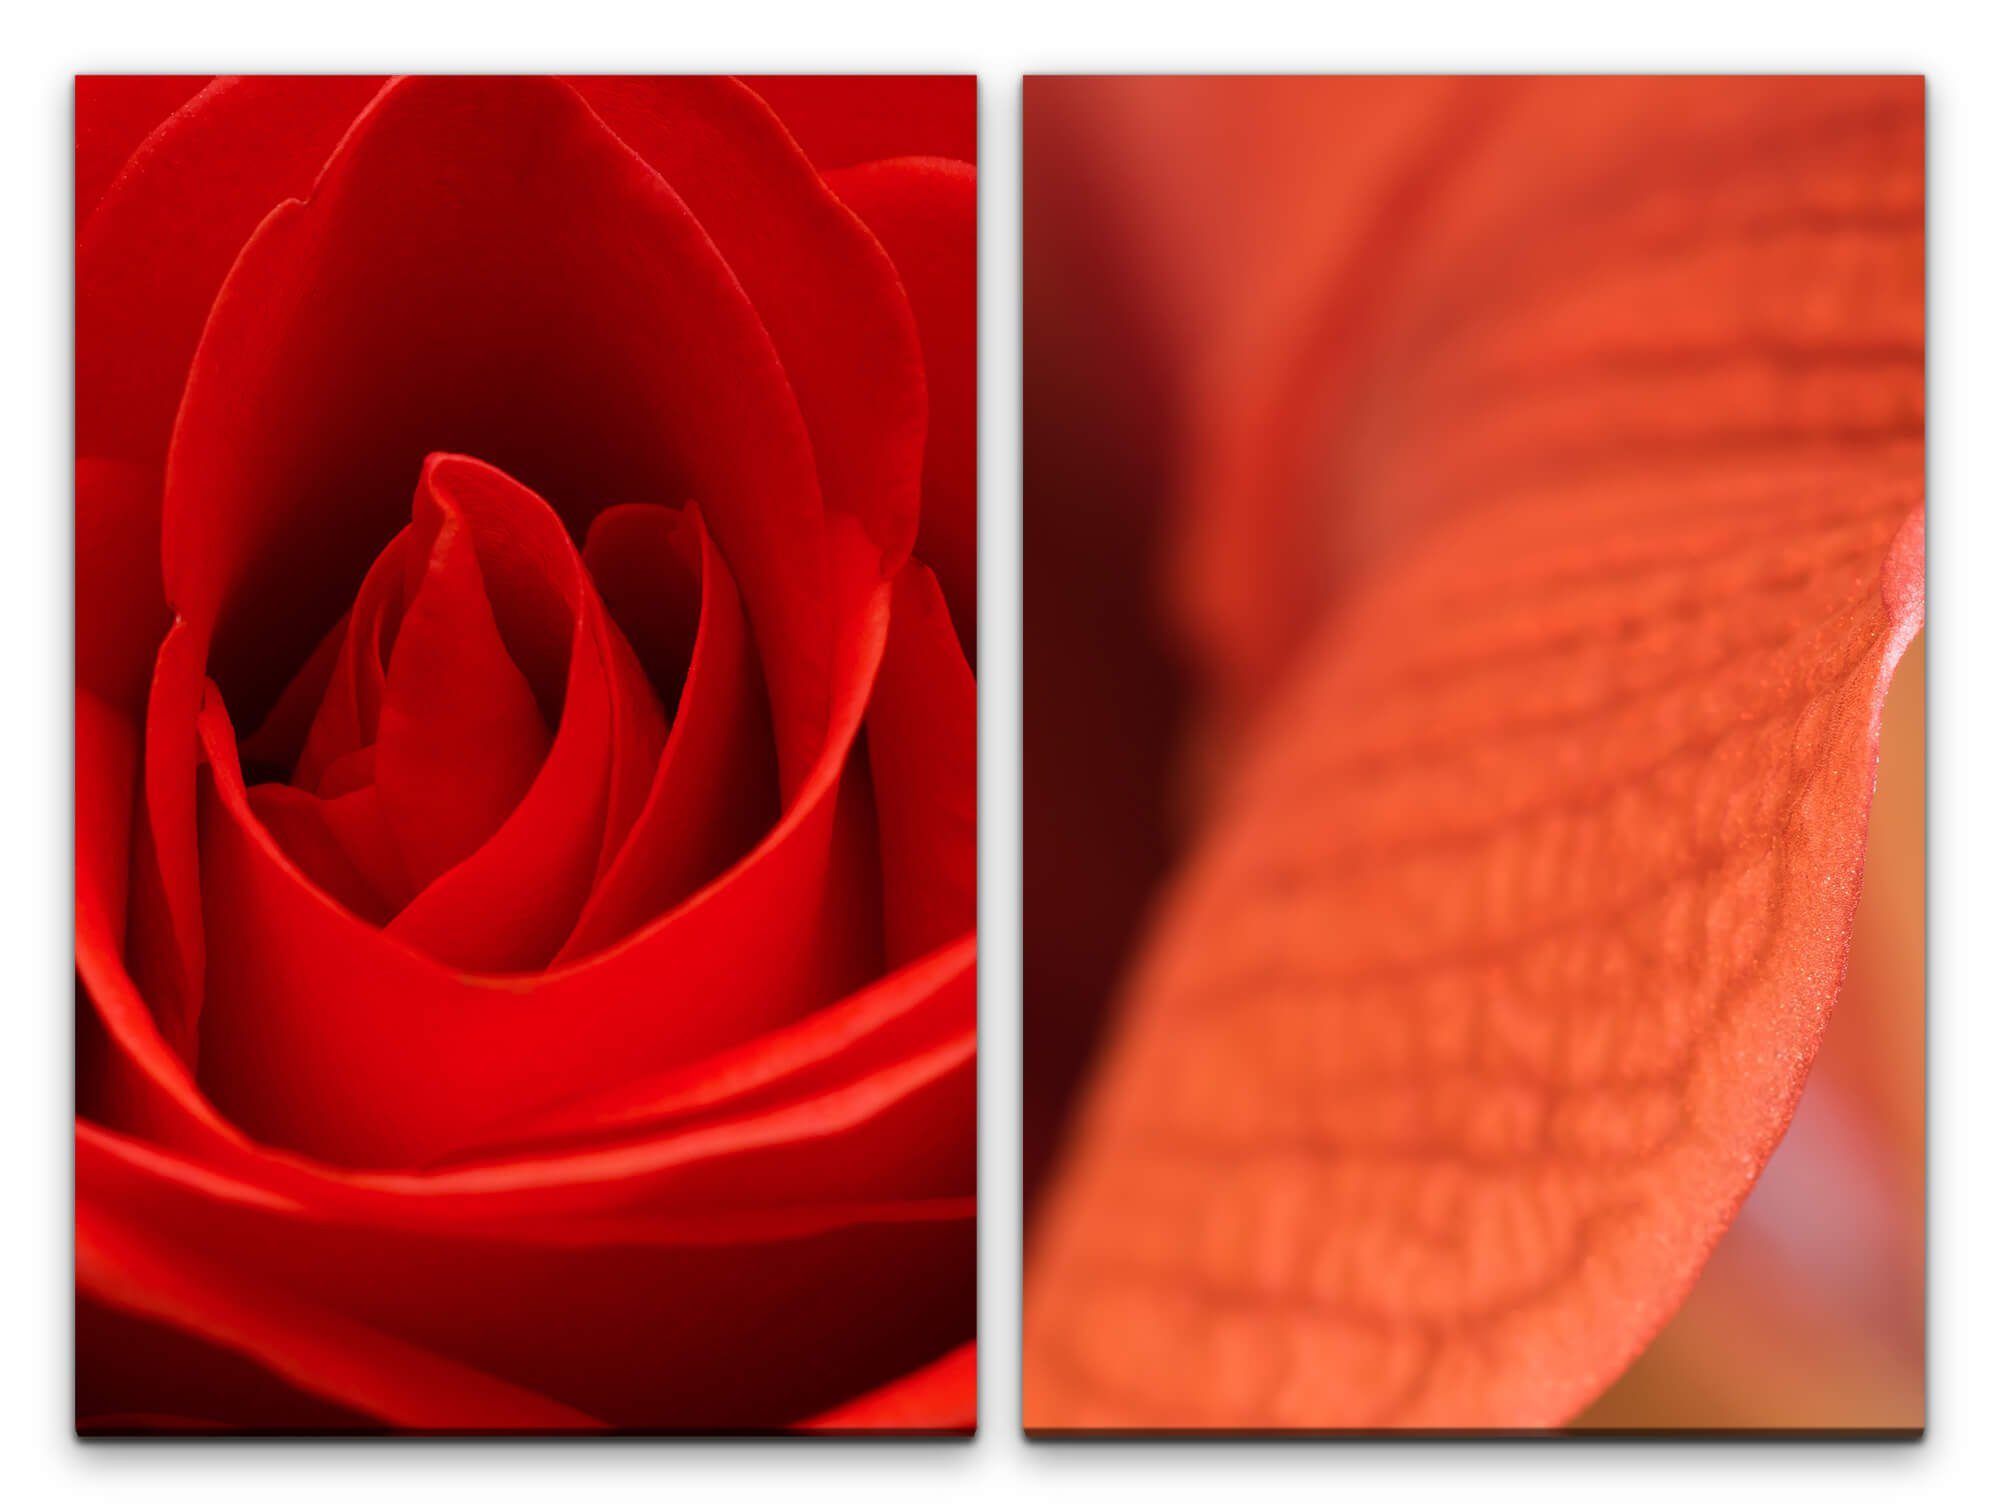 Sinus Art Leinwandbild 2 Bilder je 60x90cm Rose Rot Liebe Romantisch Leidenschaft Verführerisch Passion